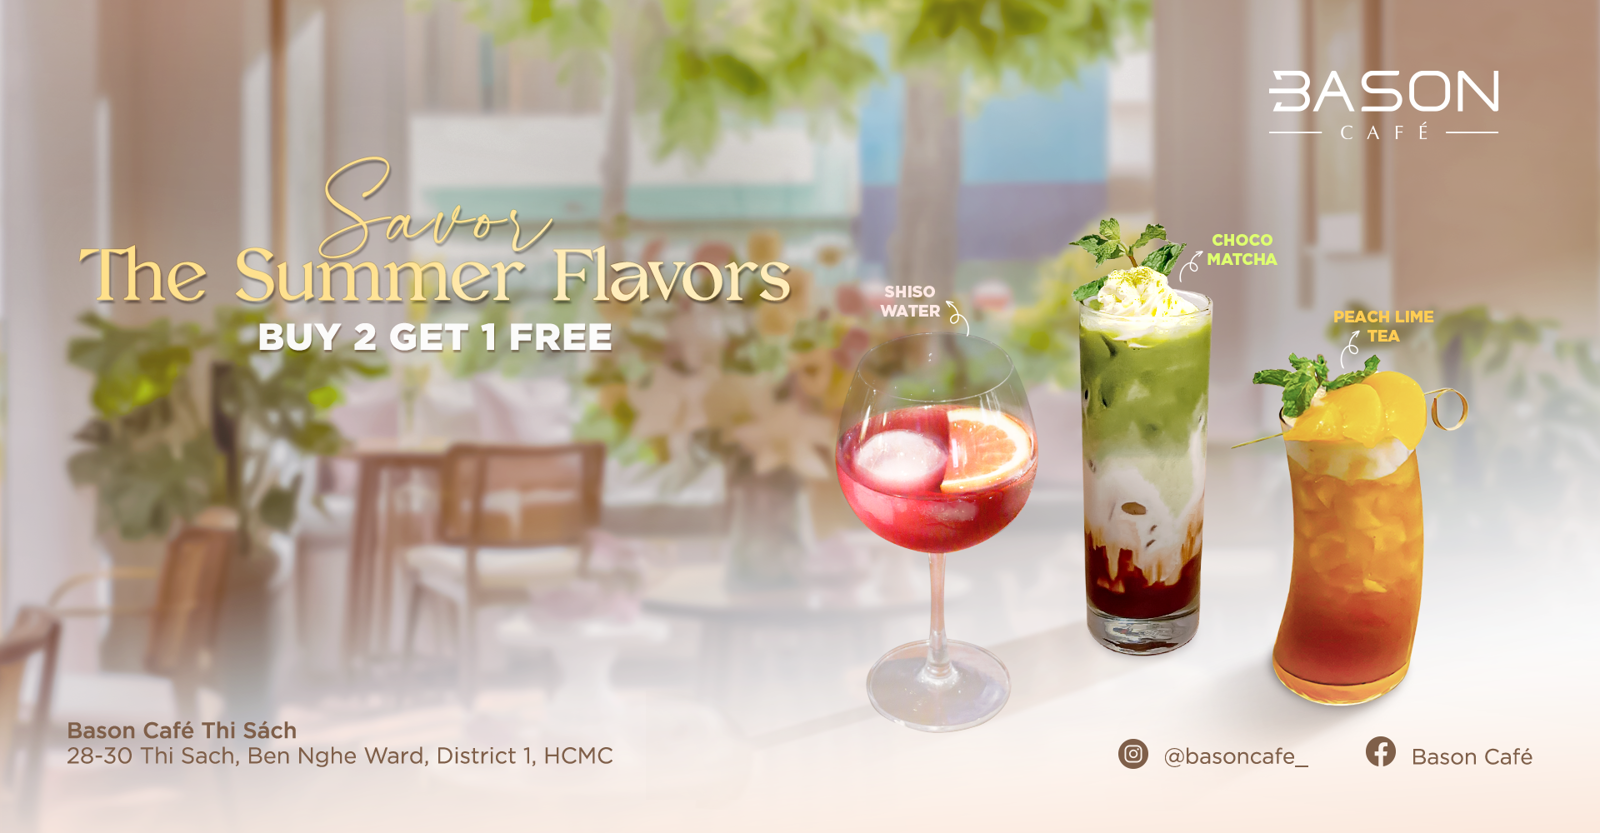 BASON CAFÉ – Savor The Summer Flavors